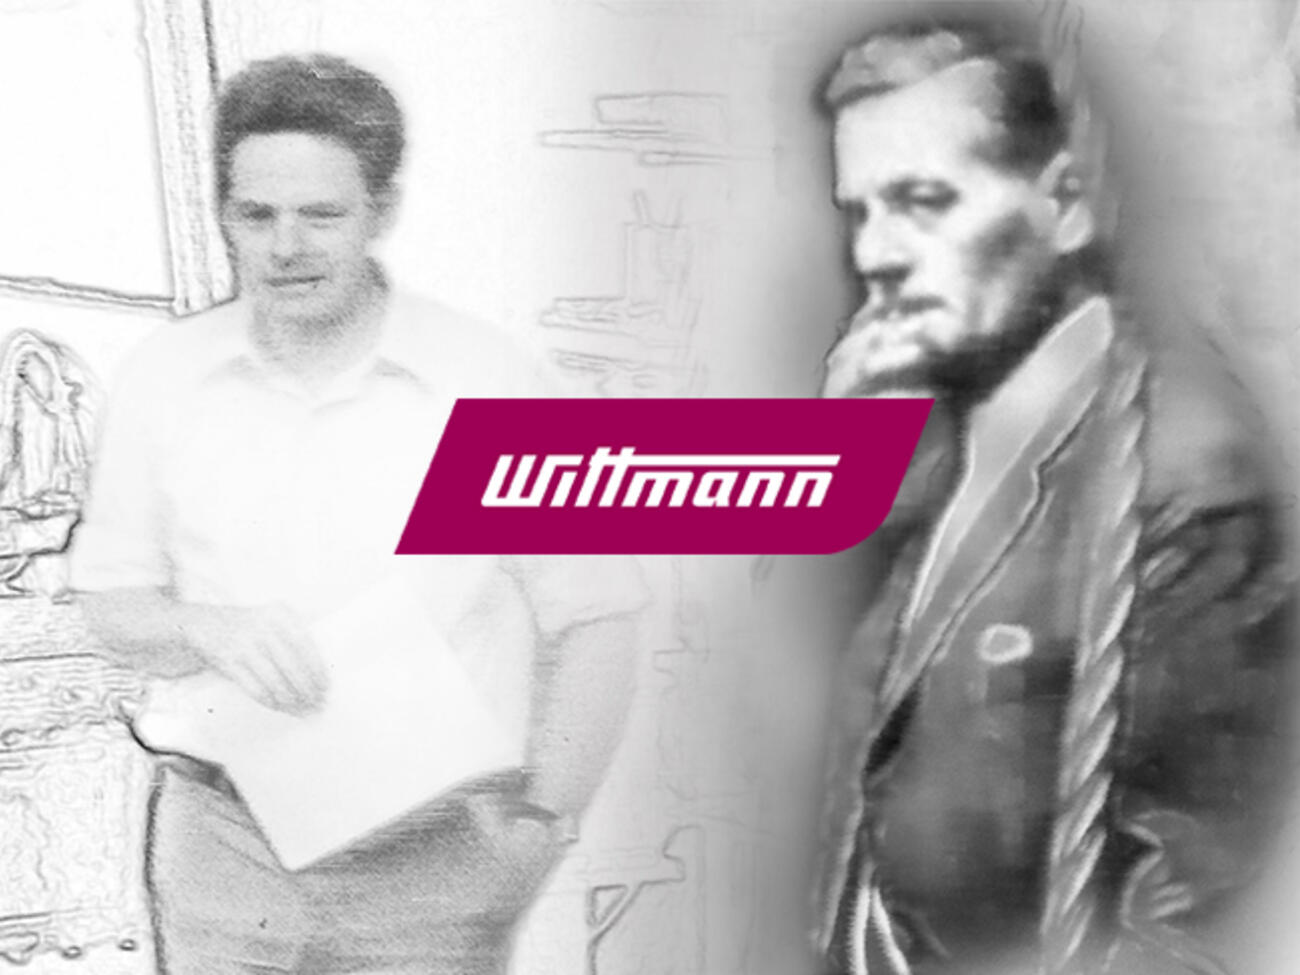 The beginnings of WITTMANN Technologies